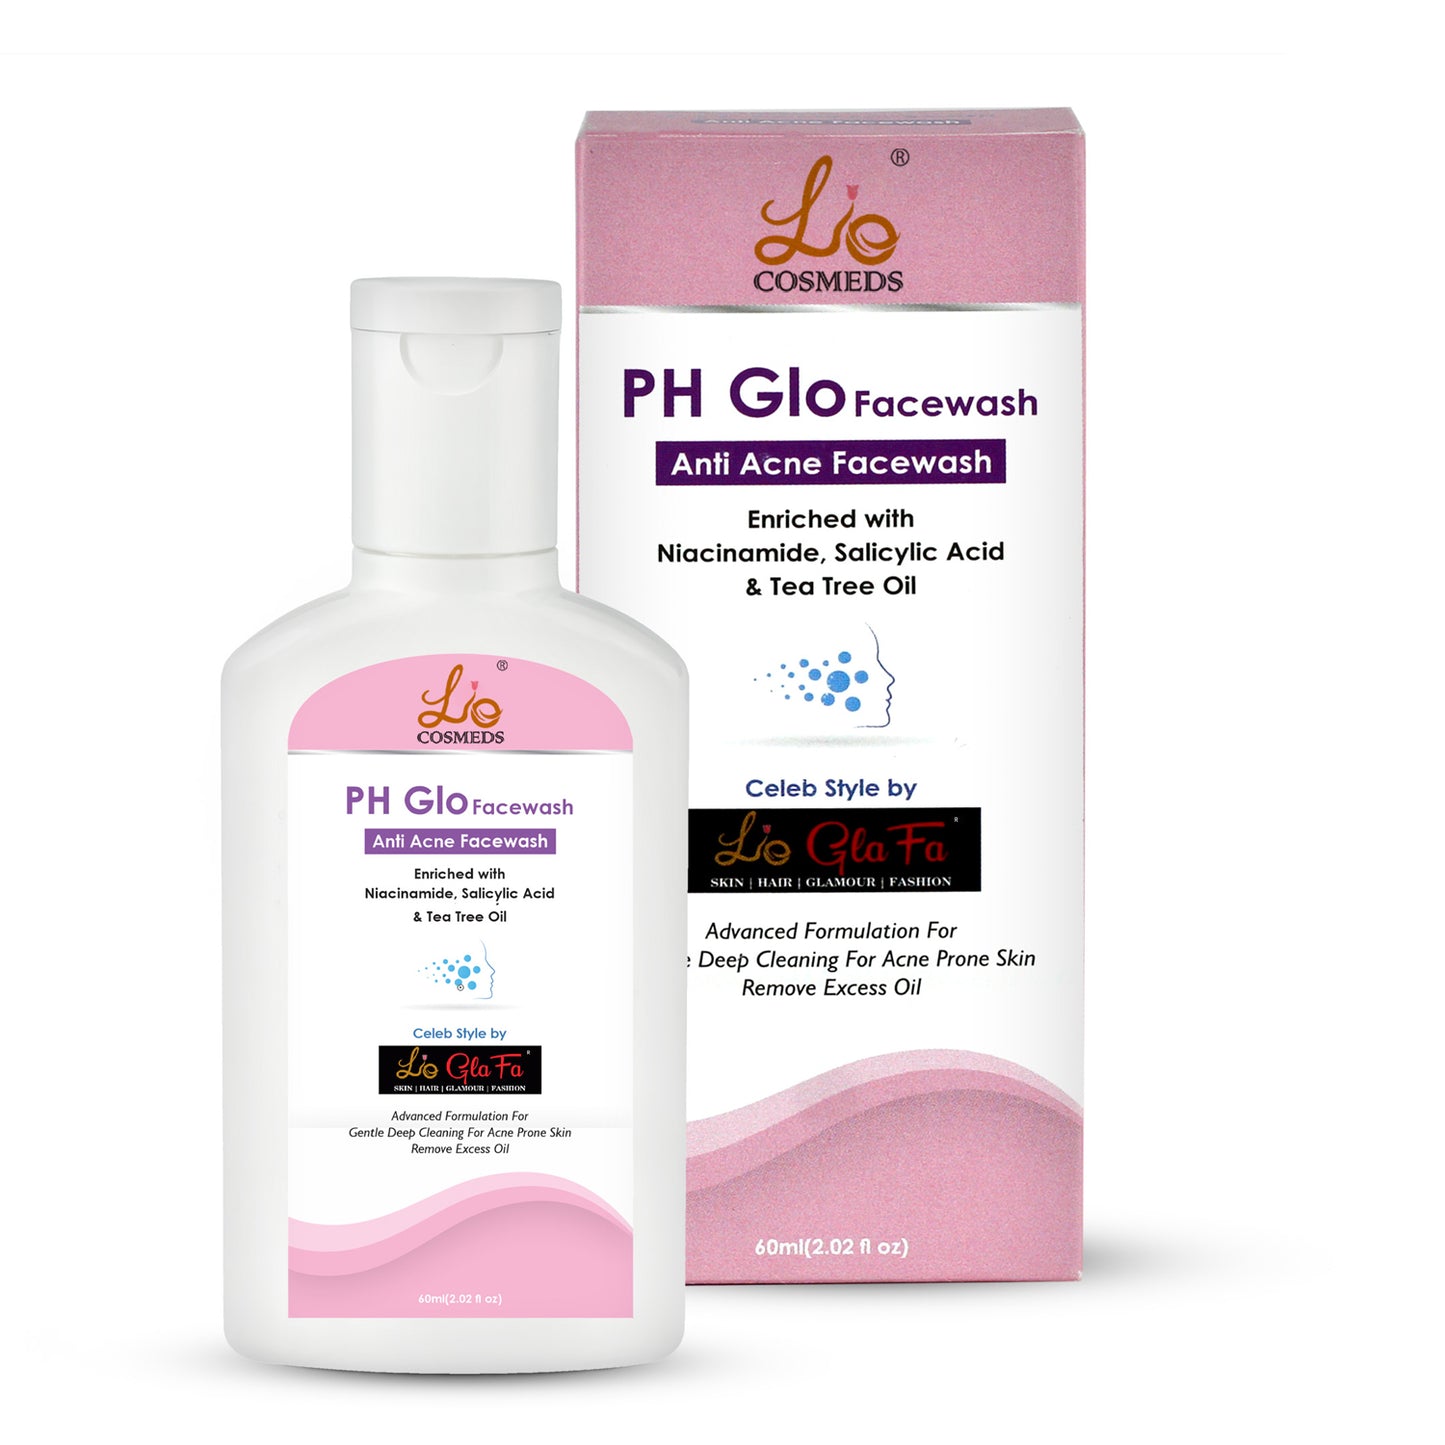 Phglo Anti Acne Facewash